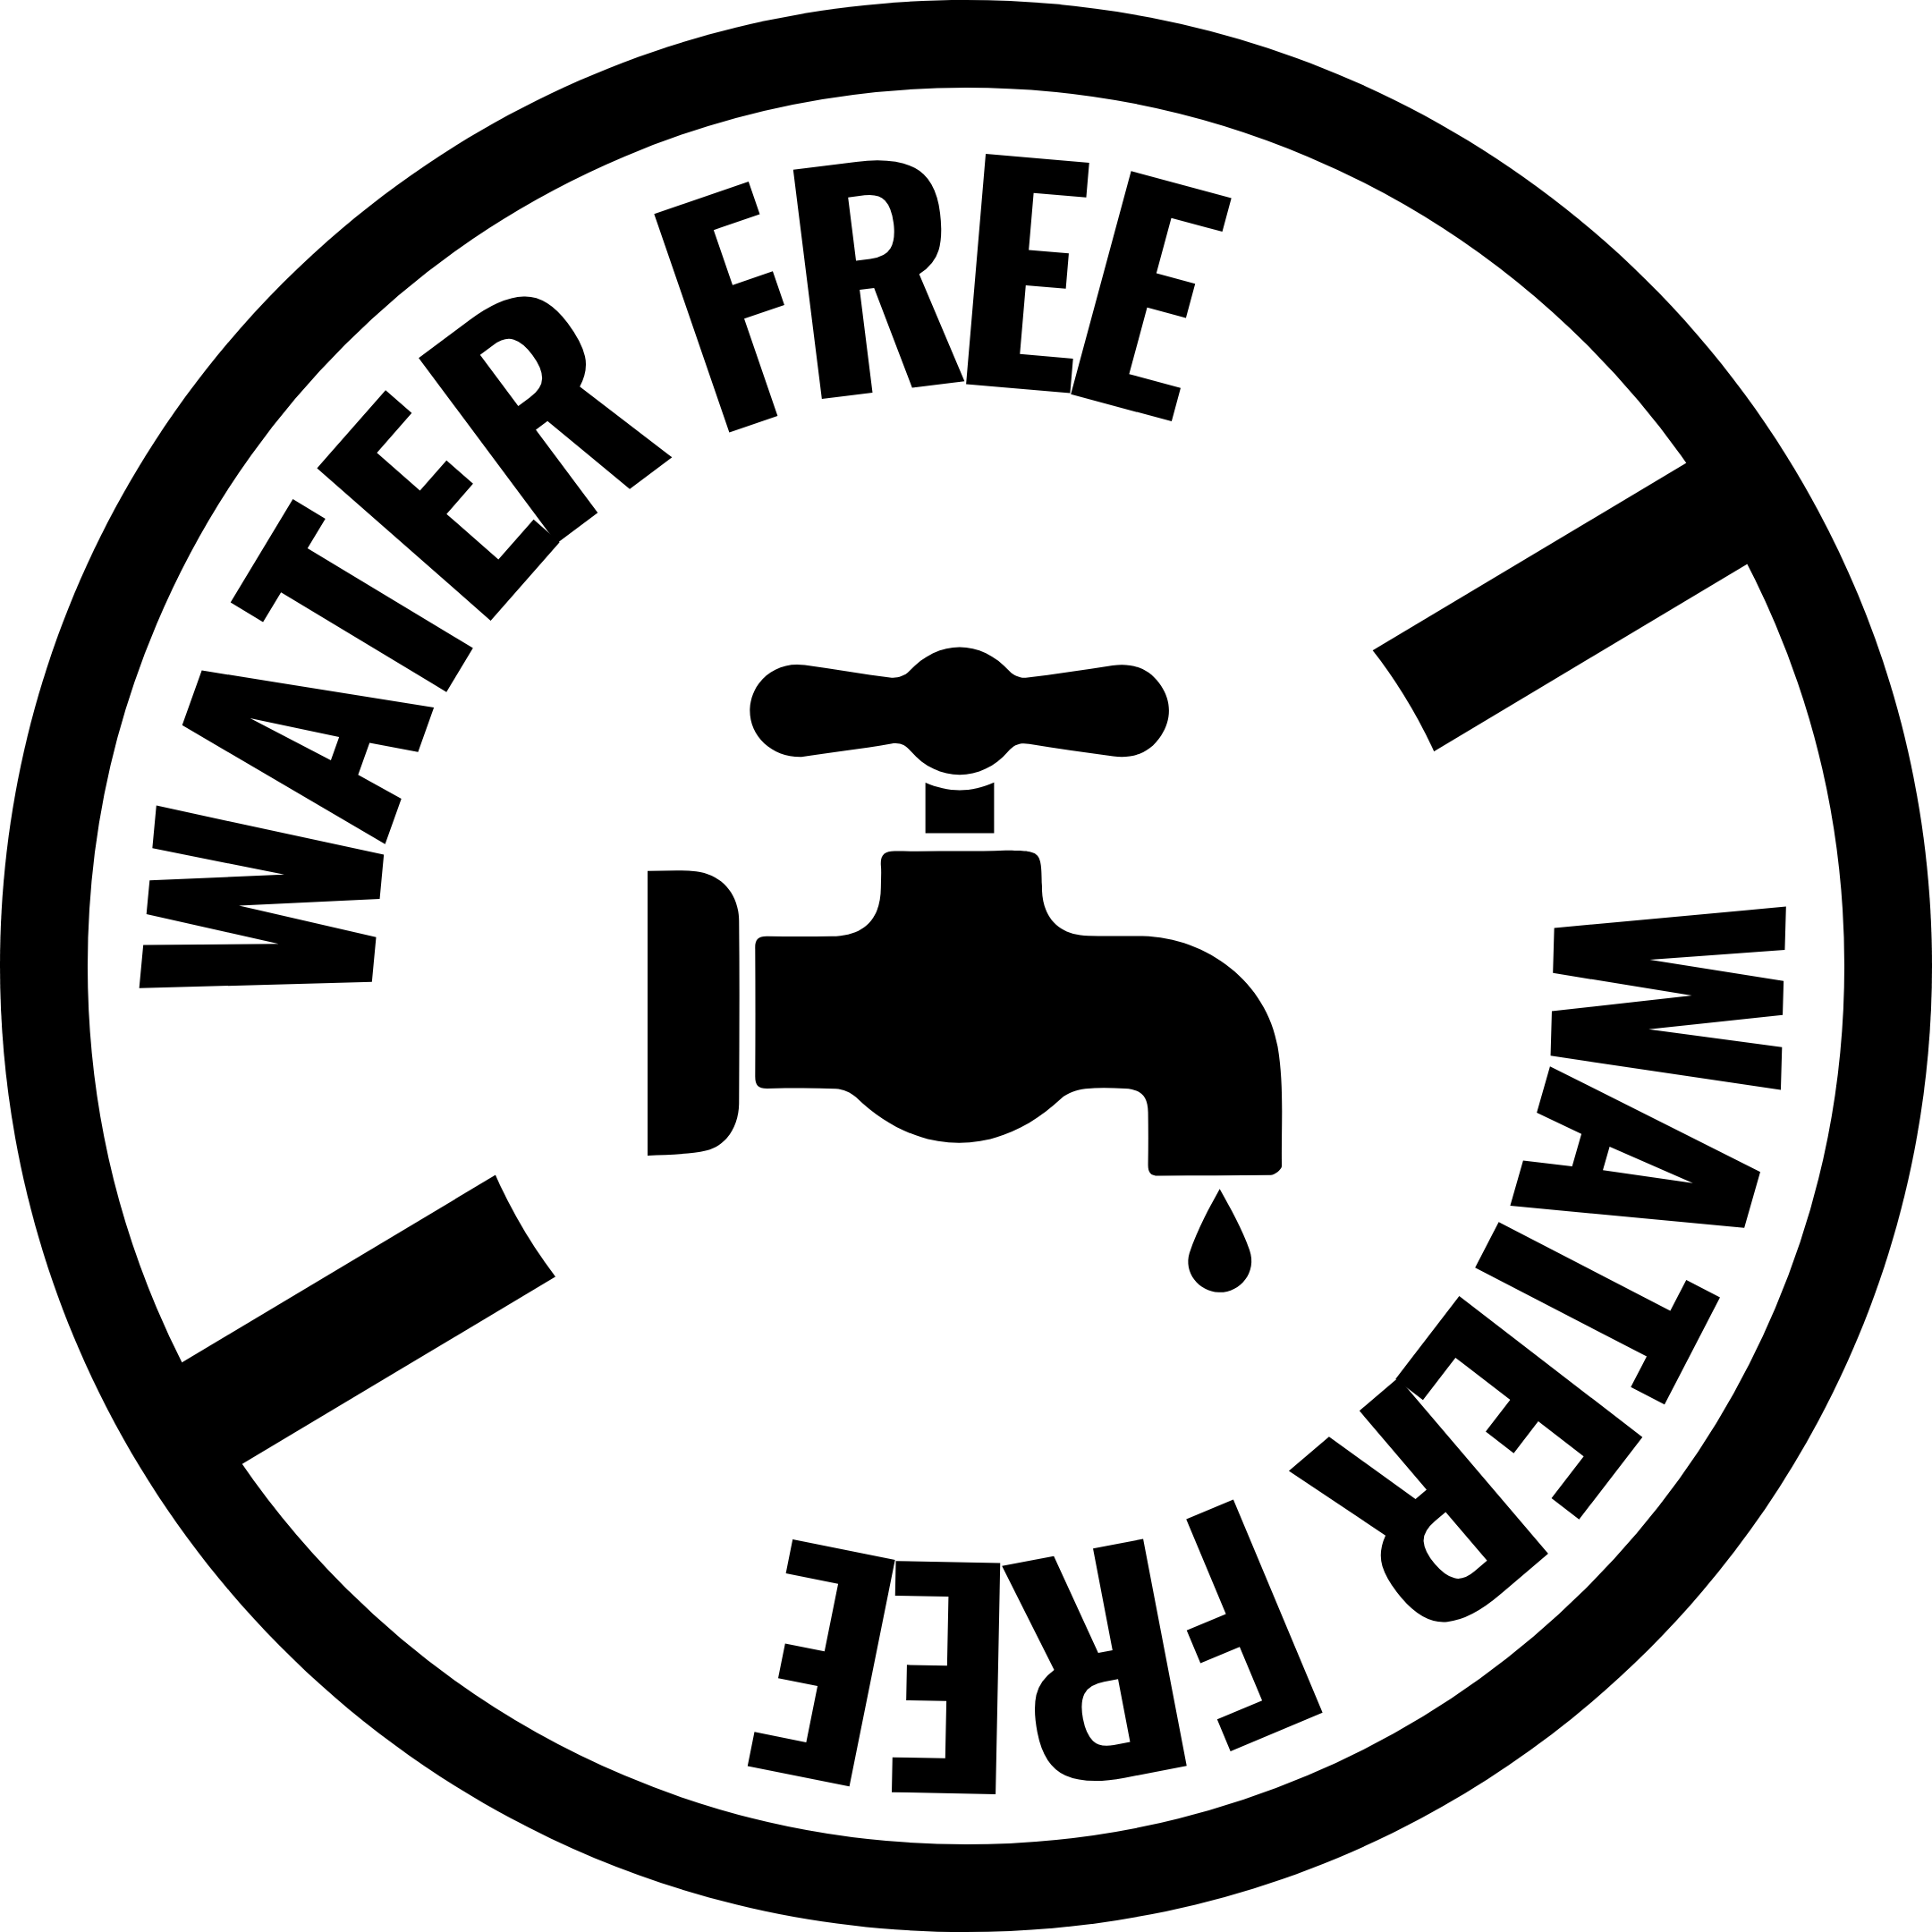 WATER FREE